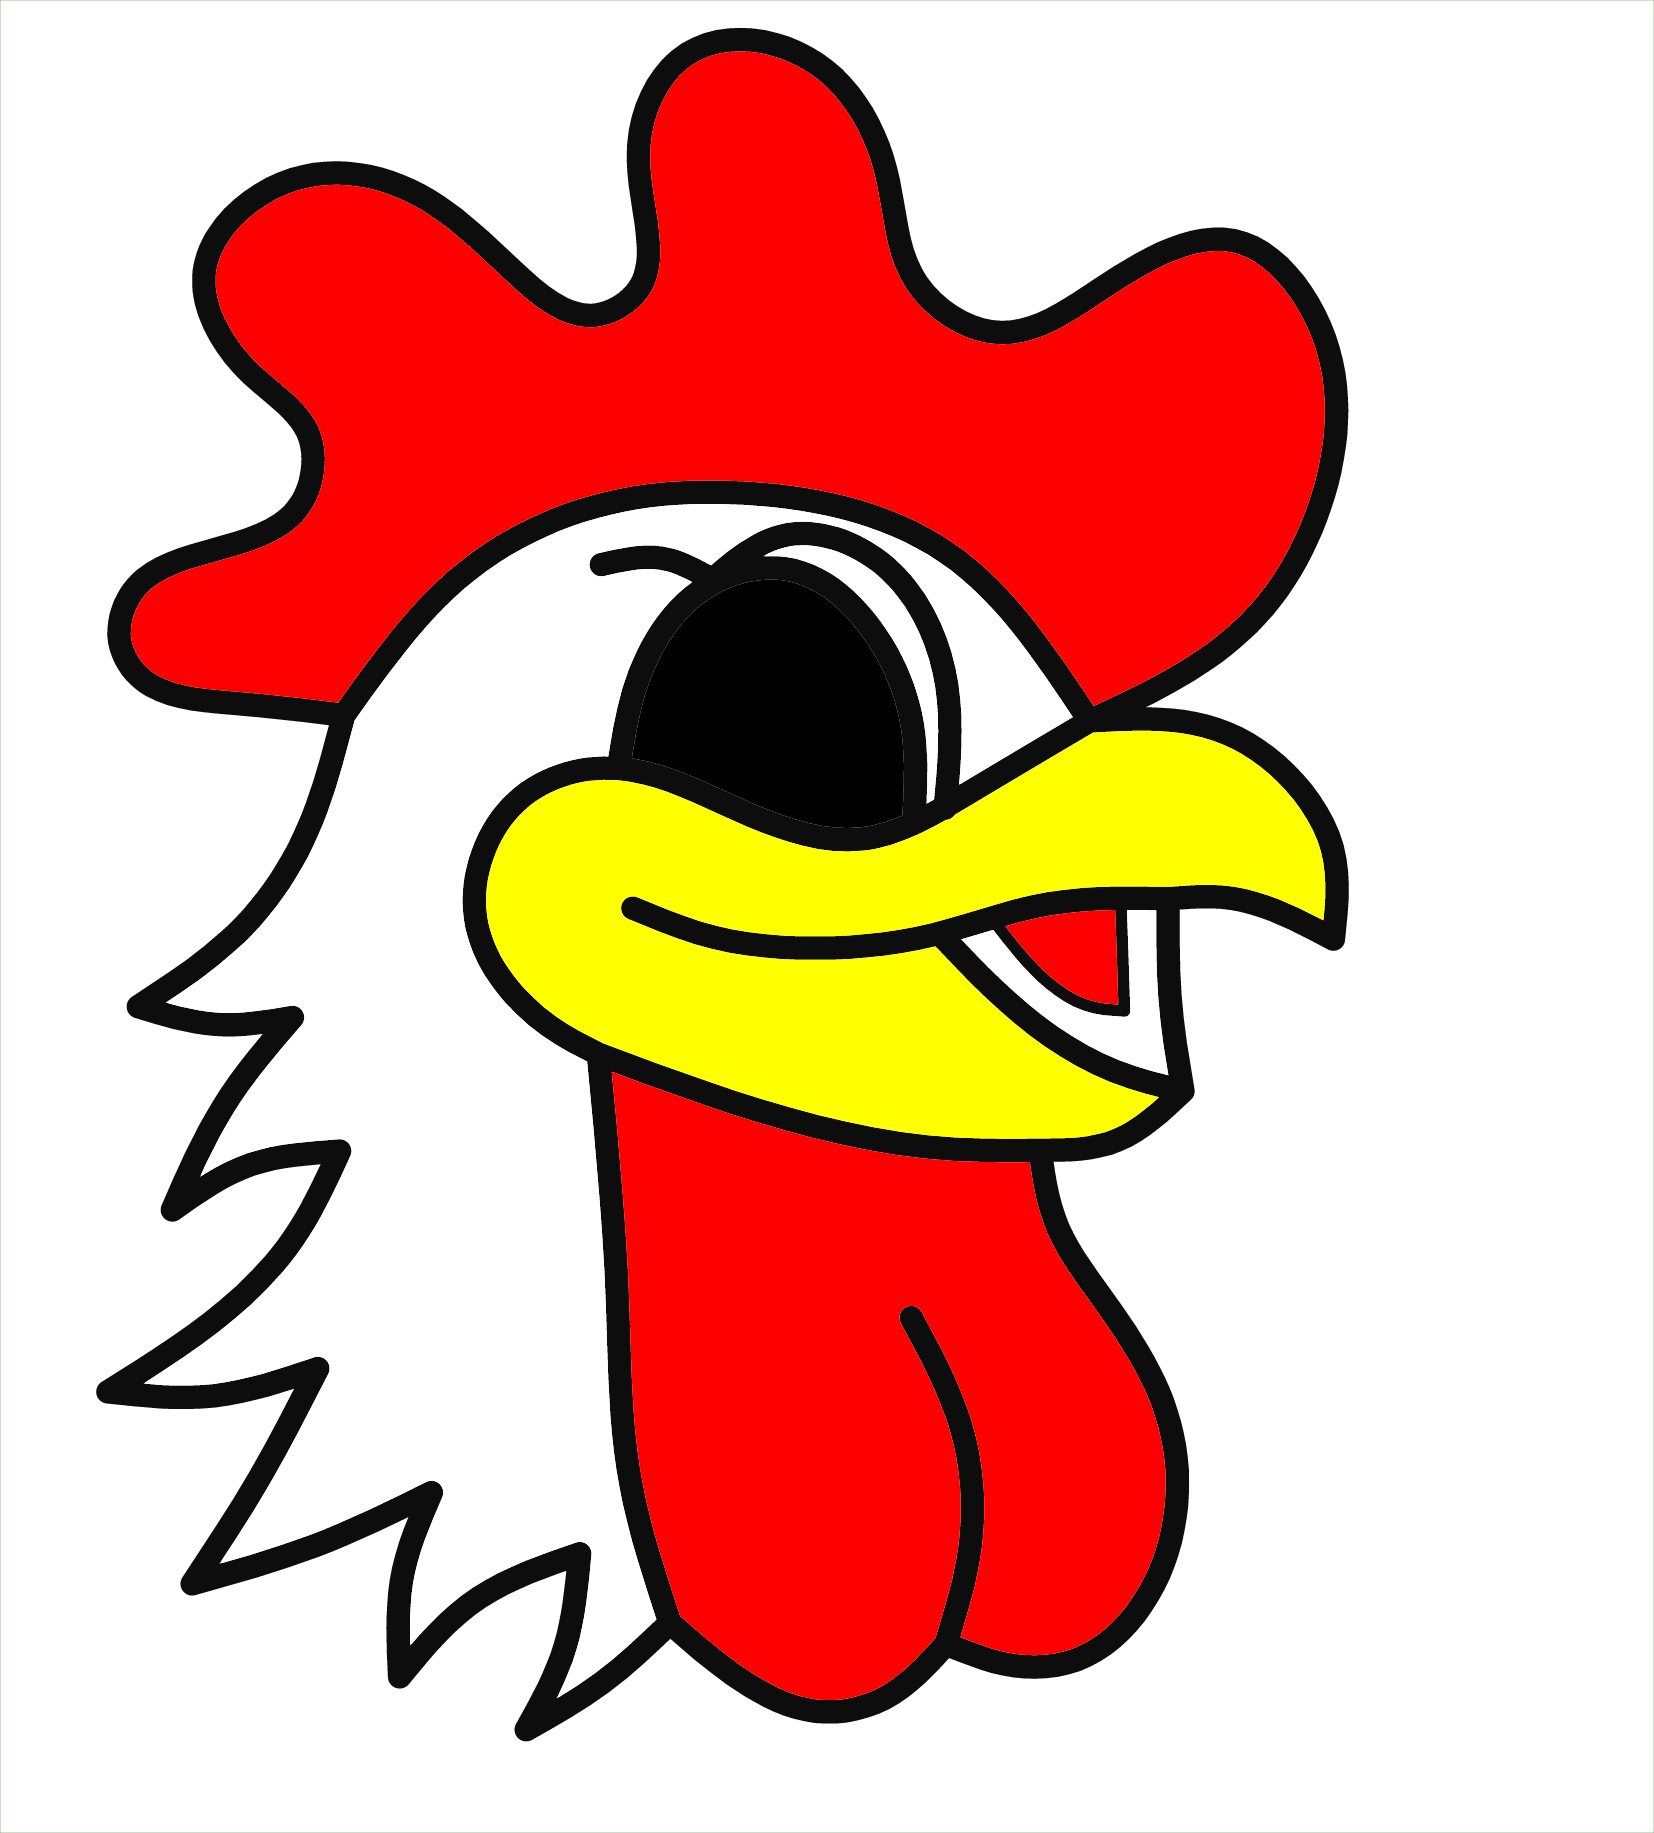 Fried chicken logo stock vector. Illustration of circle - 105362710